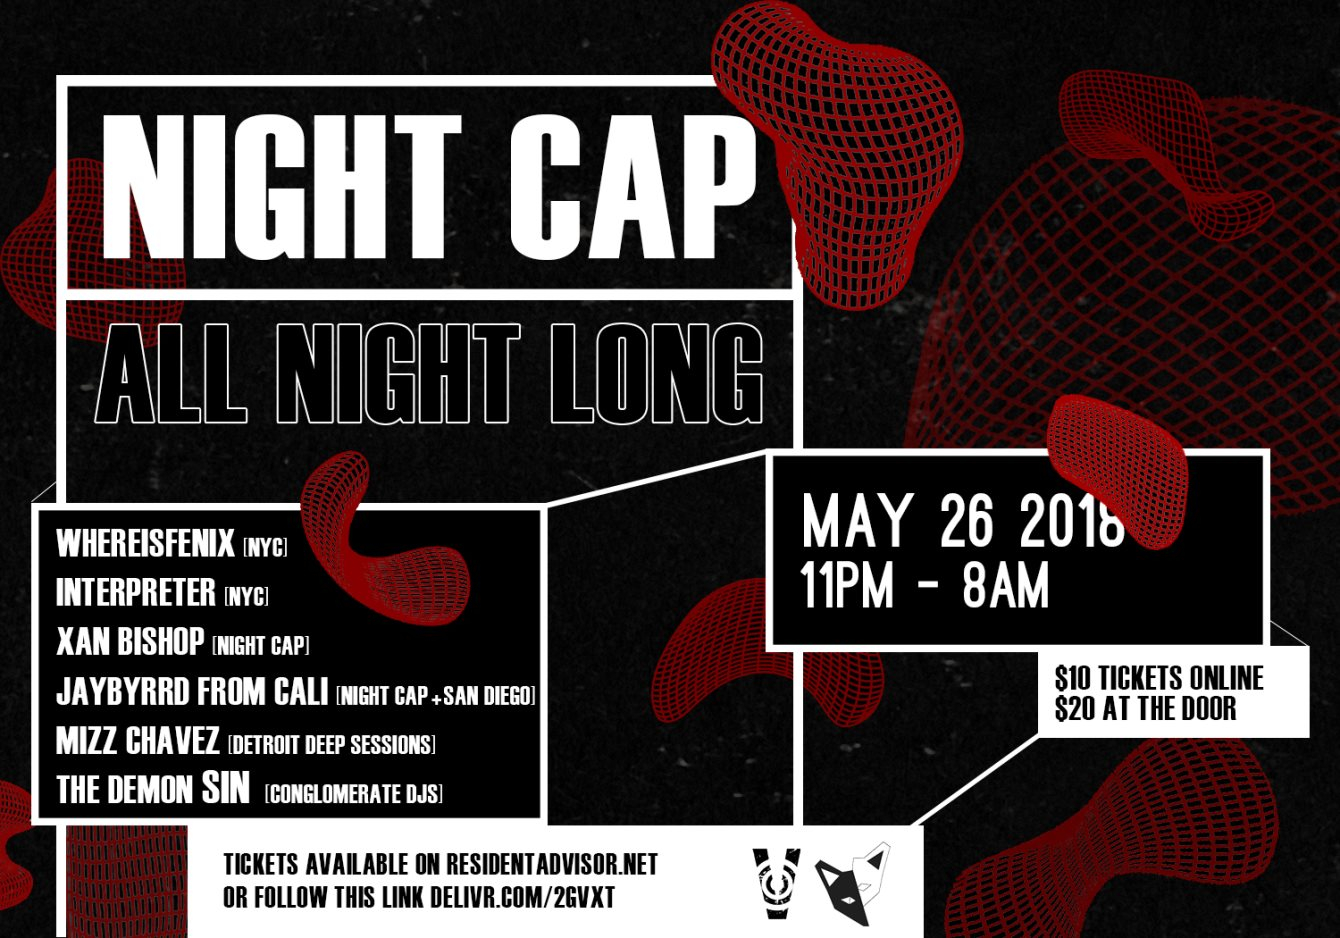 Night Cap: All Night Long - Flyer front